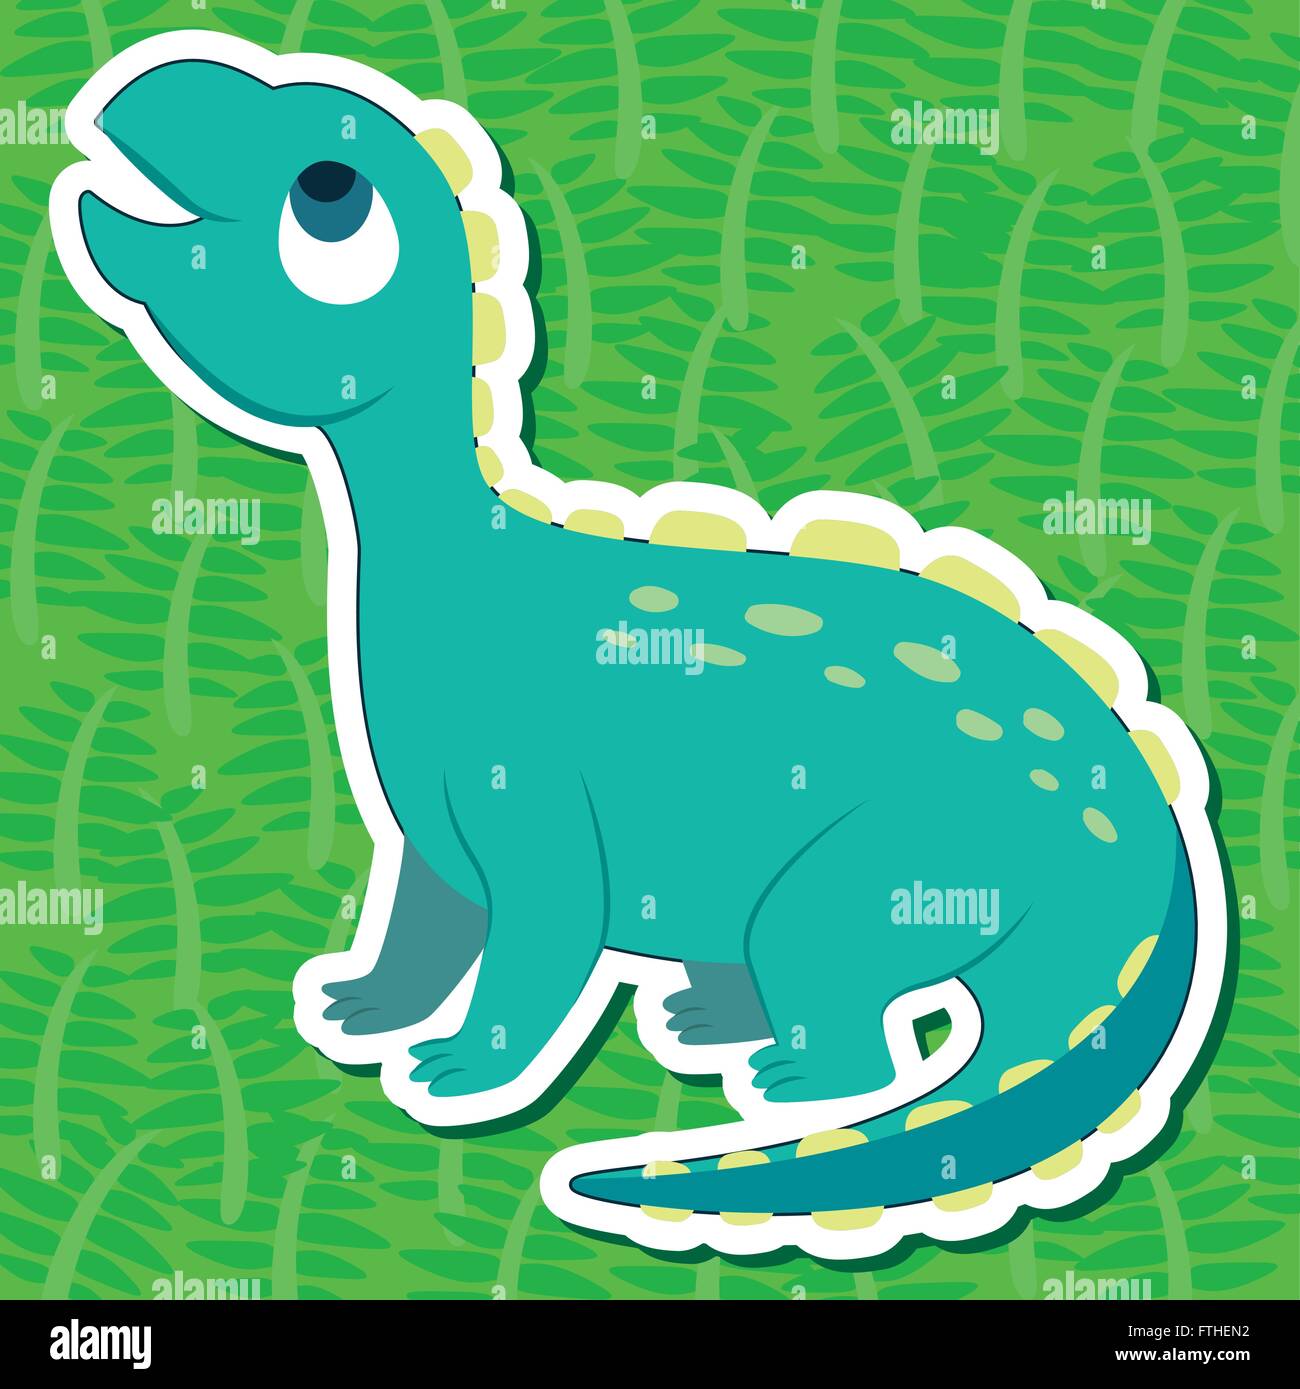 Cute Dinosaur' Sticker